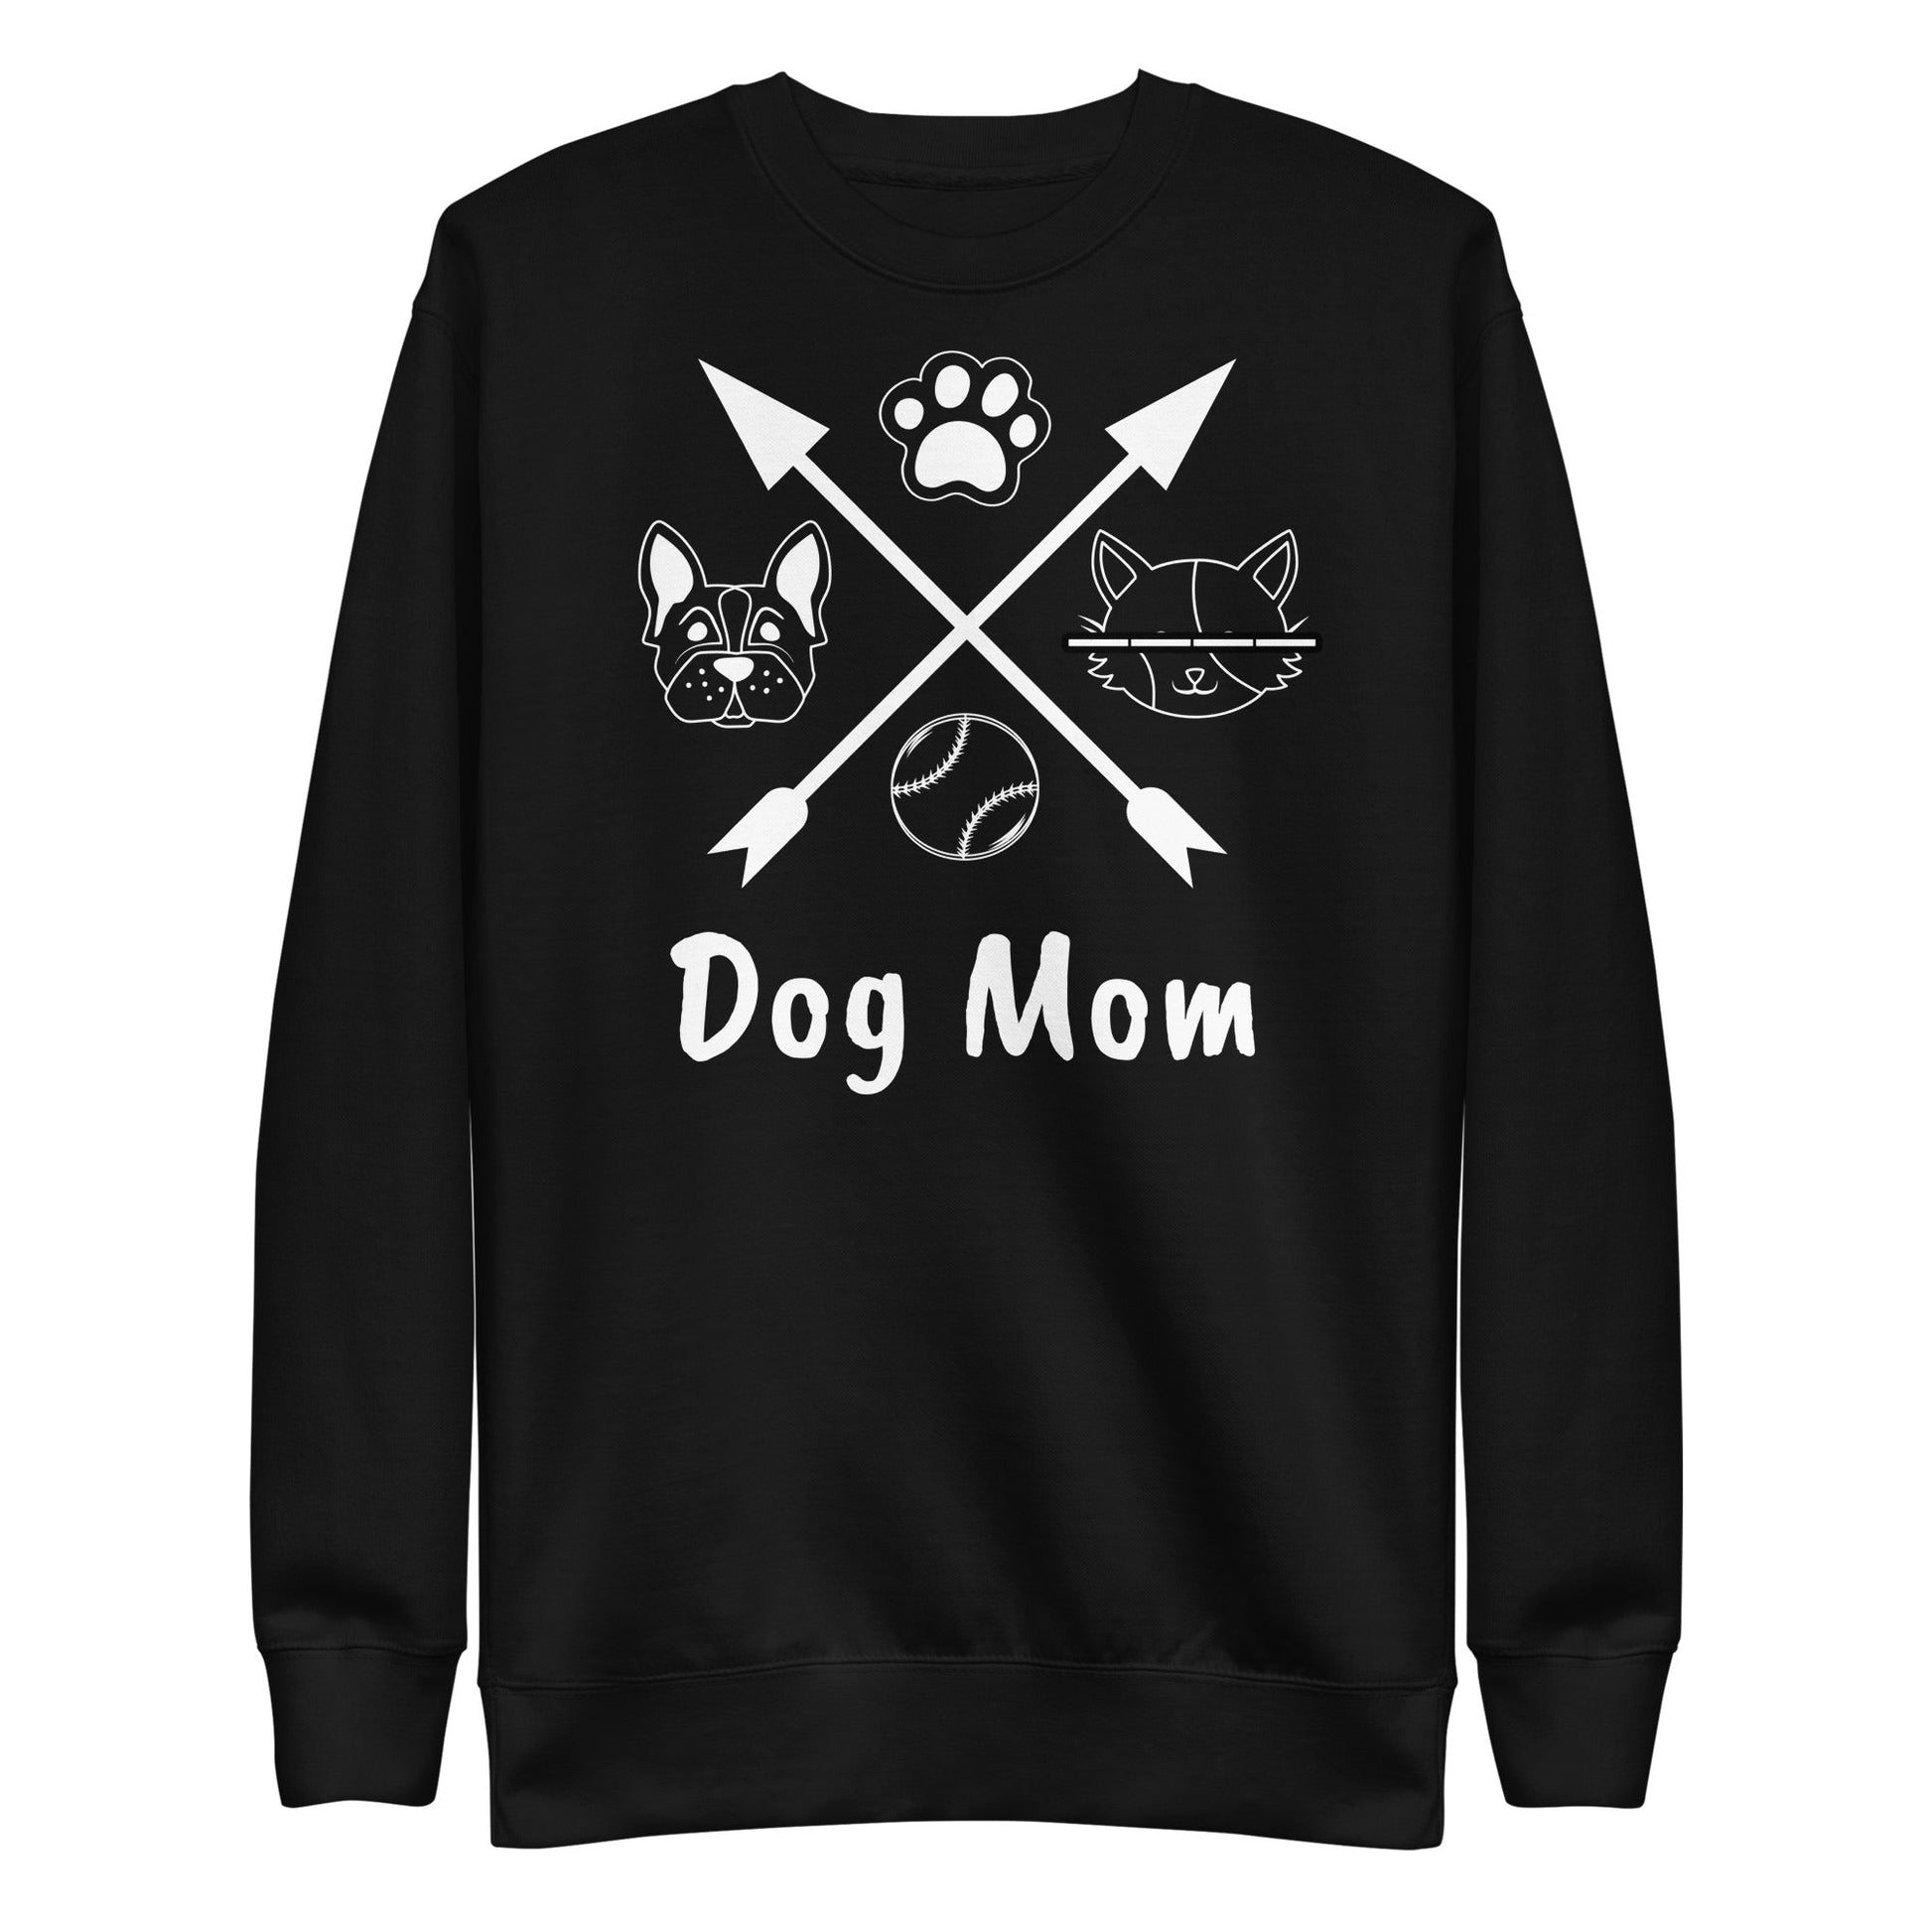 Dog Mom Unisex Premium Sweatshirt - Lizard Vigilante